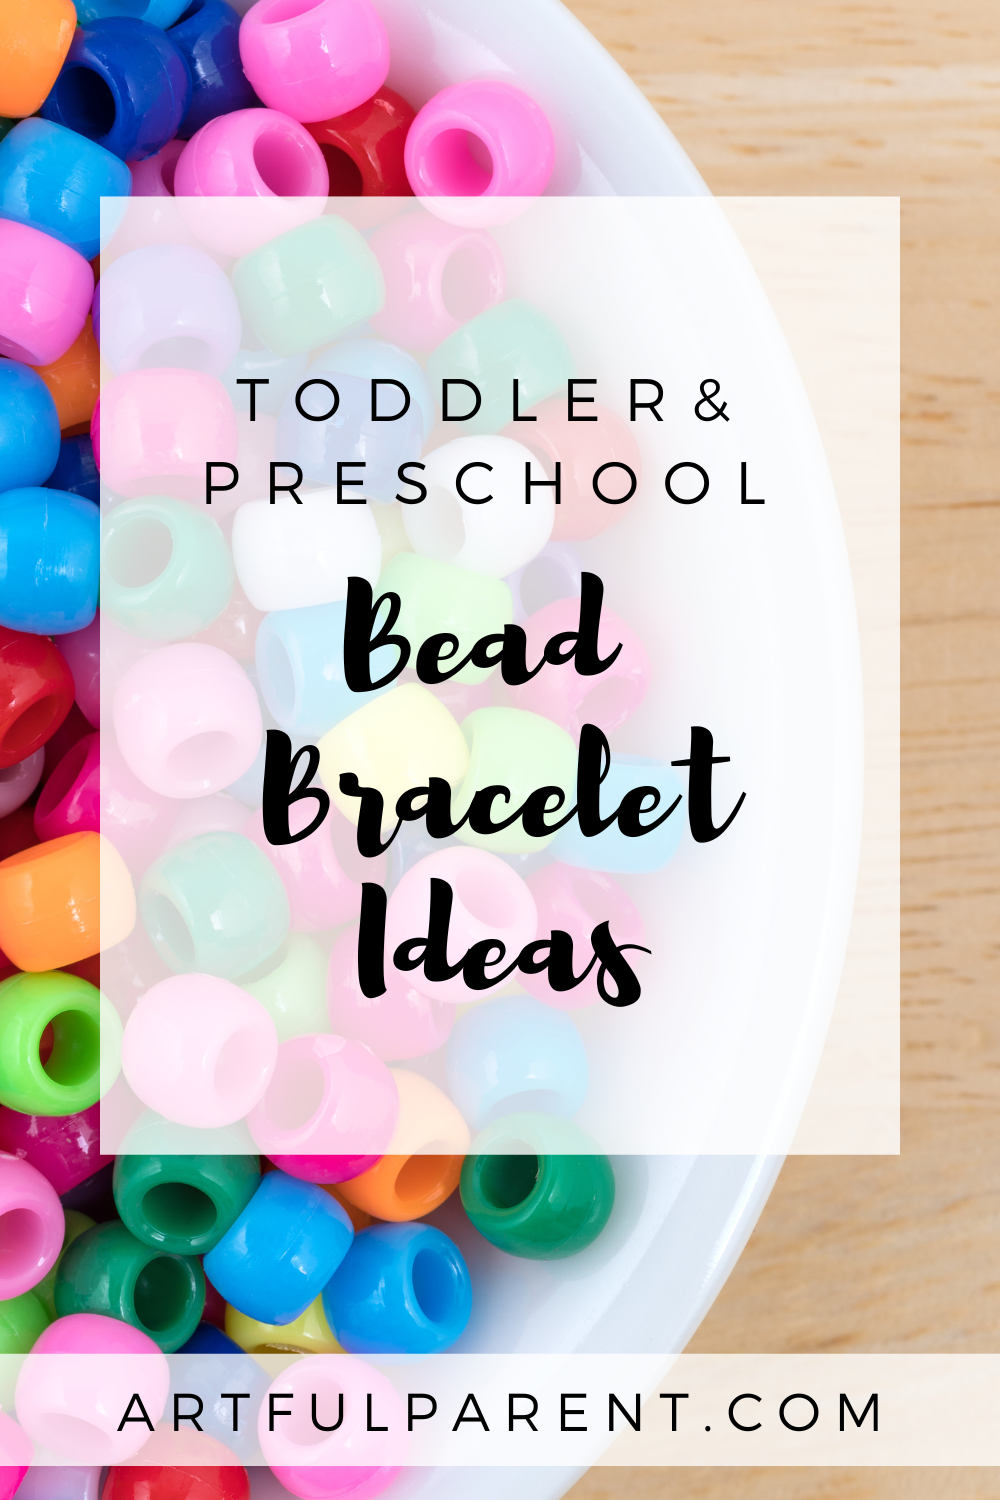 Bead Bracelet Ideas for Little Kids